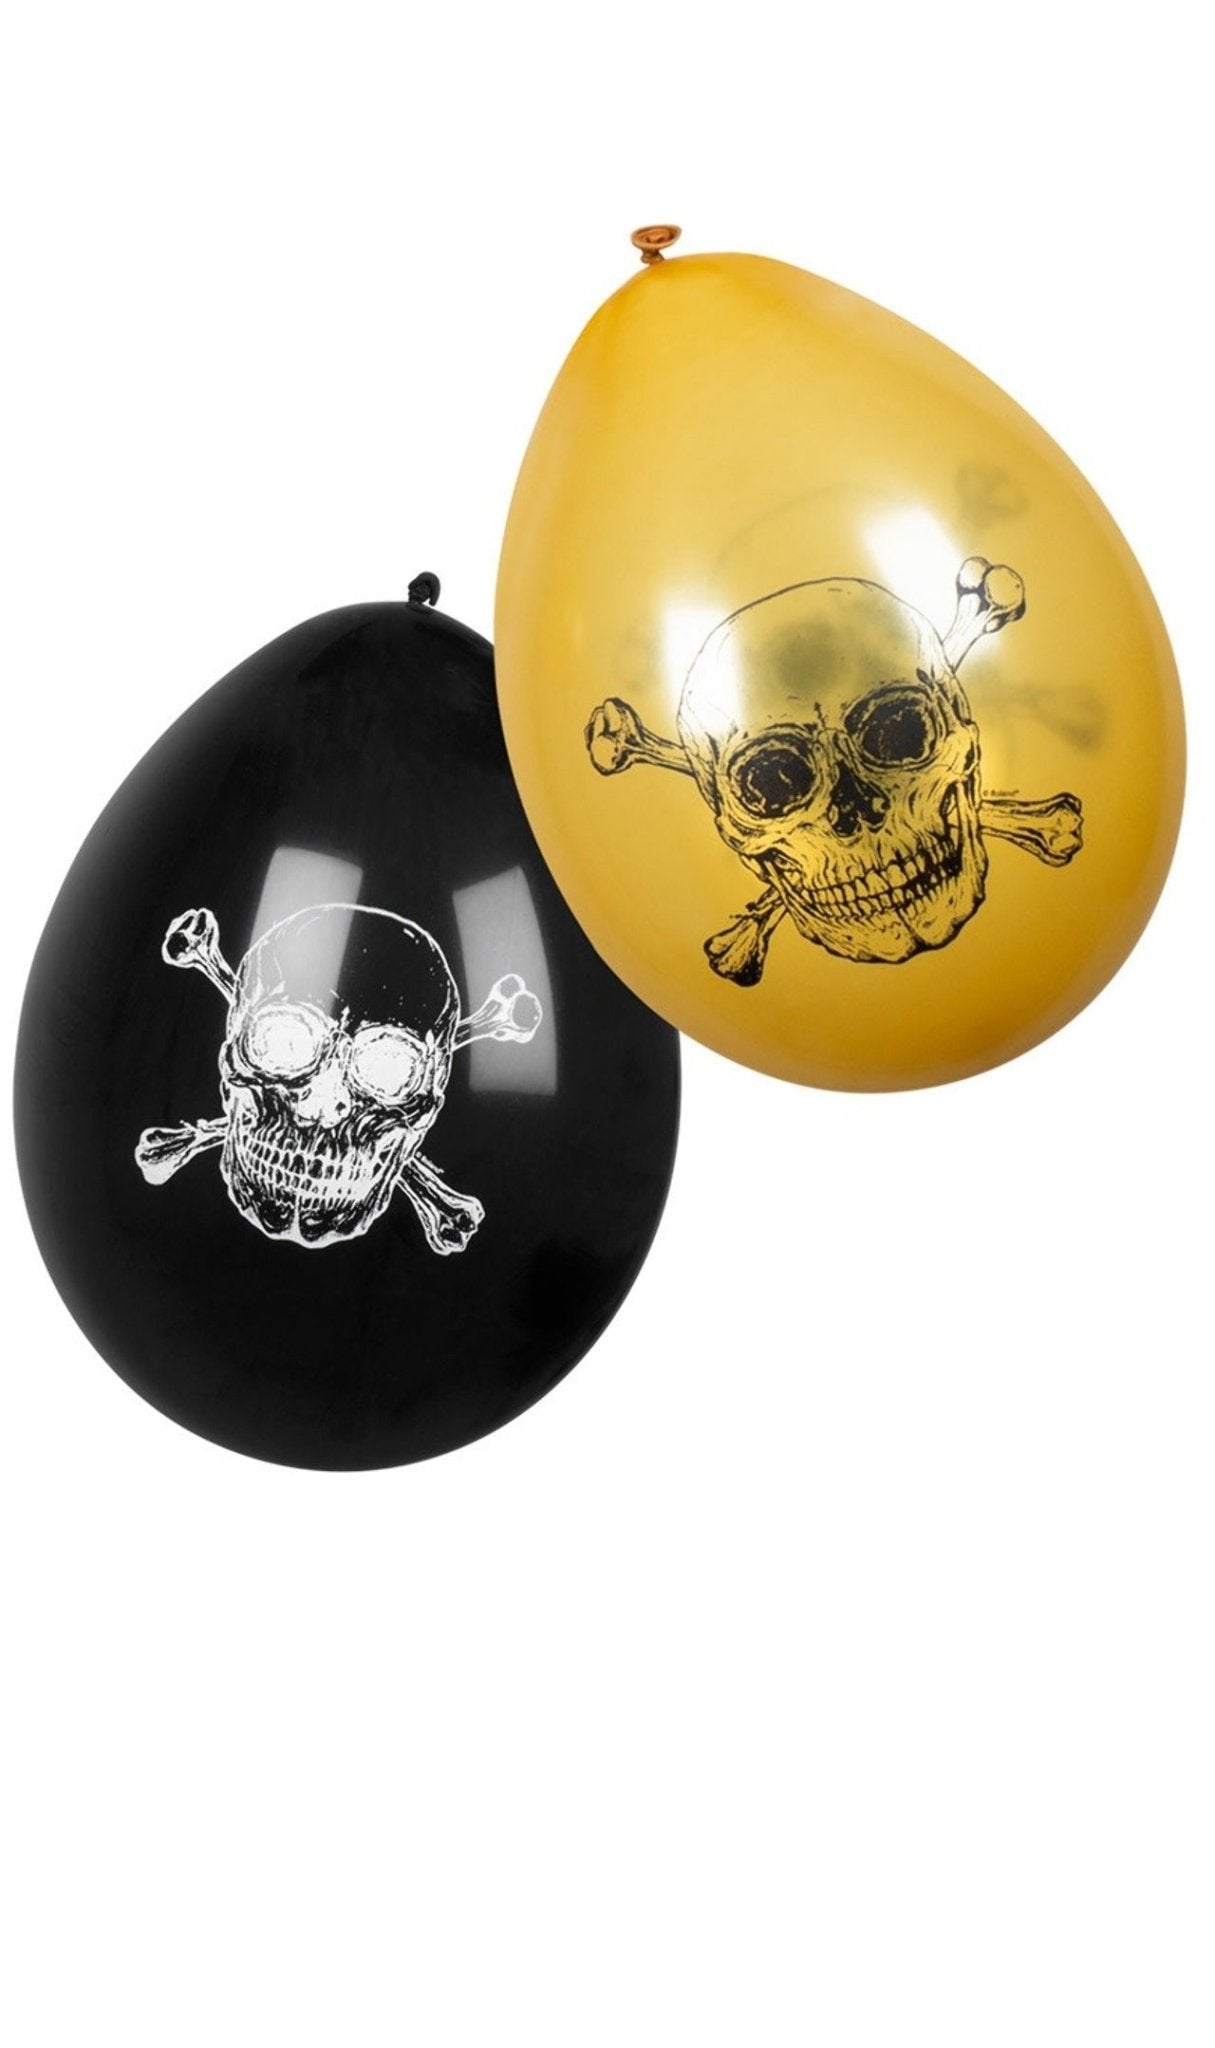 Ballons Pirate Corsaire